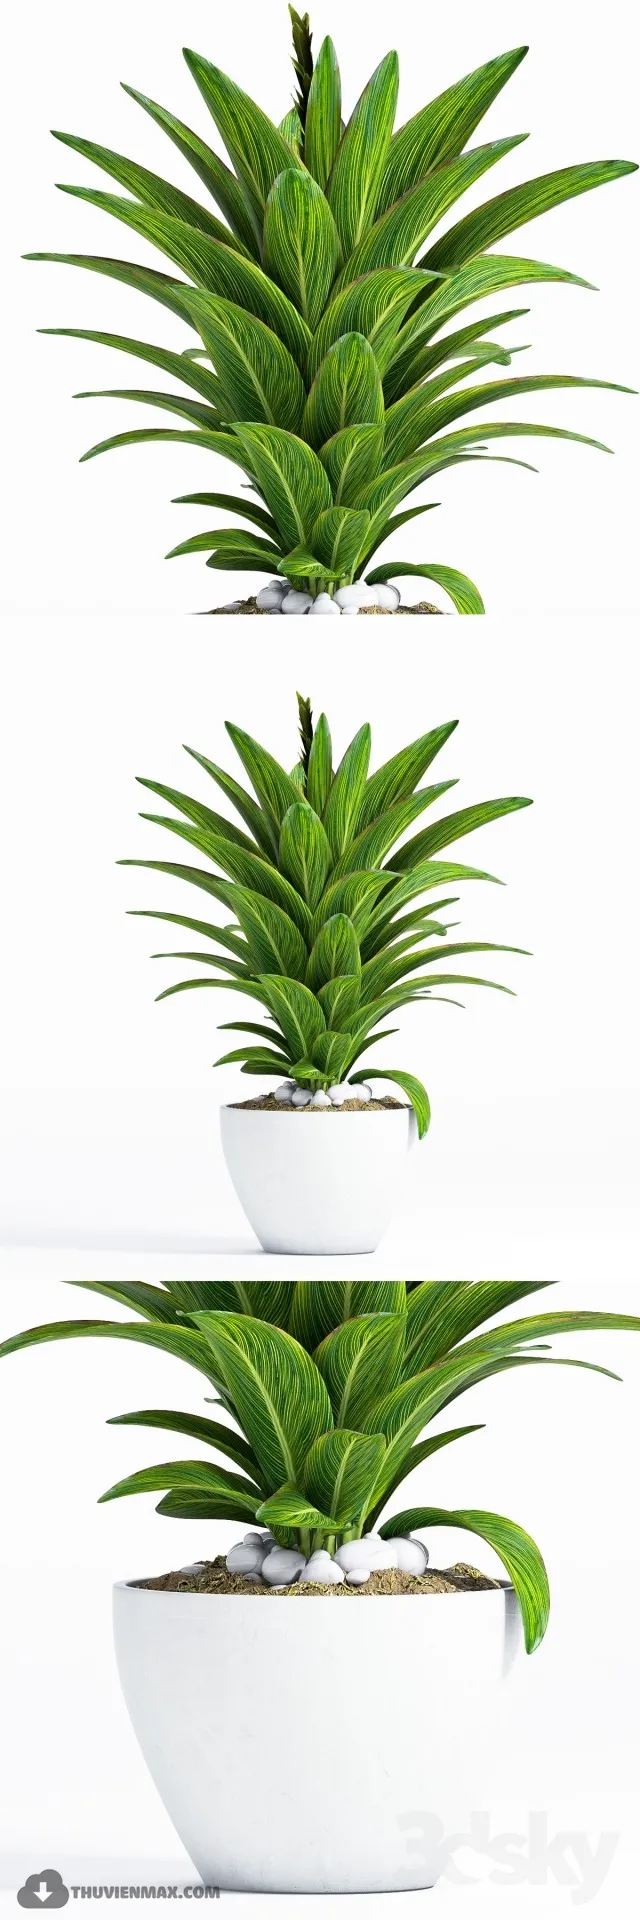 PRO PLANT 3D MODELS – 476